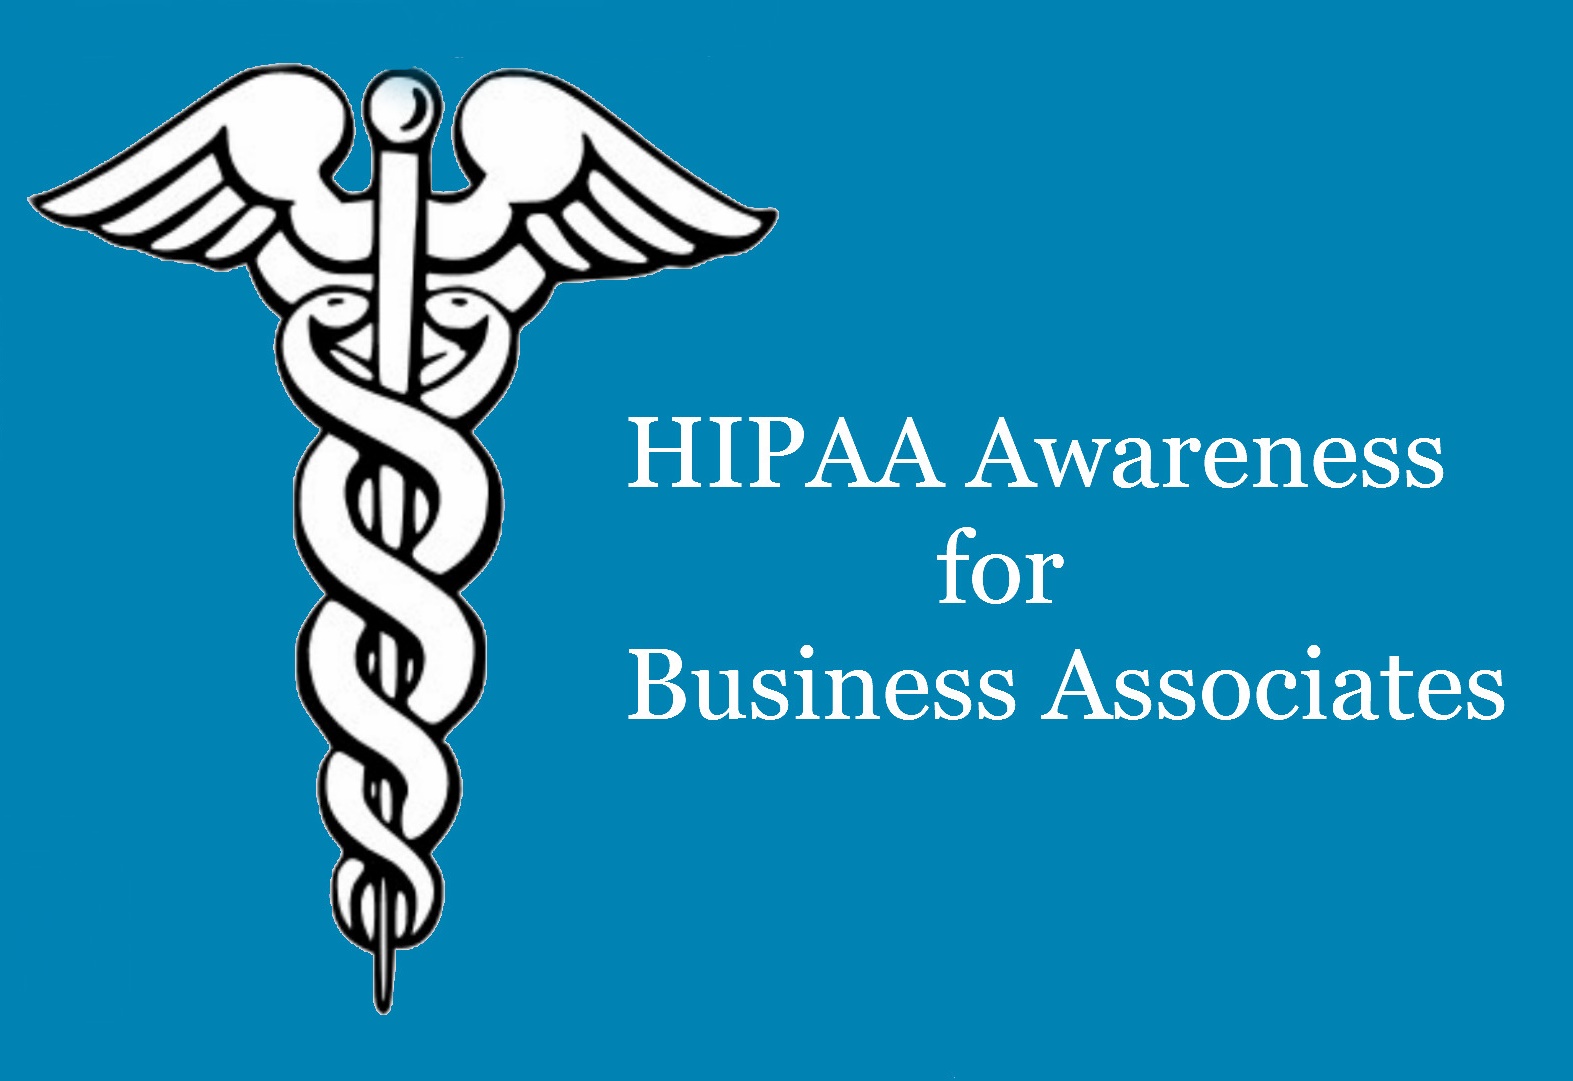 HIPAA Awareness for Business Associates